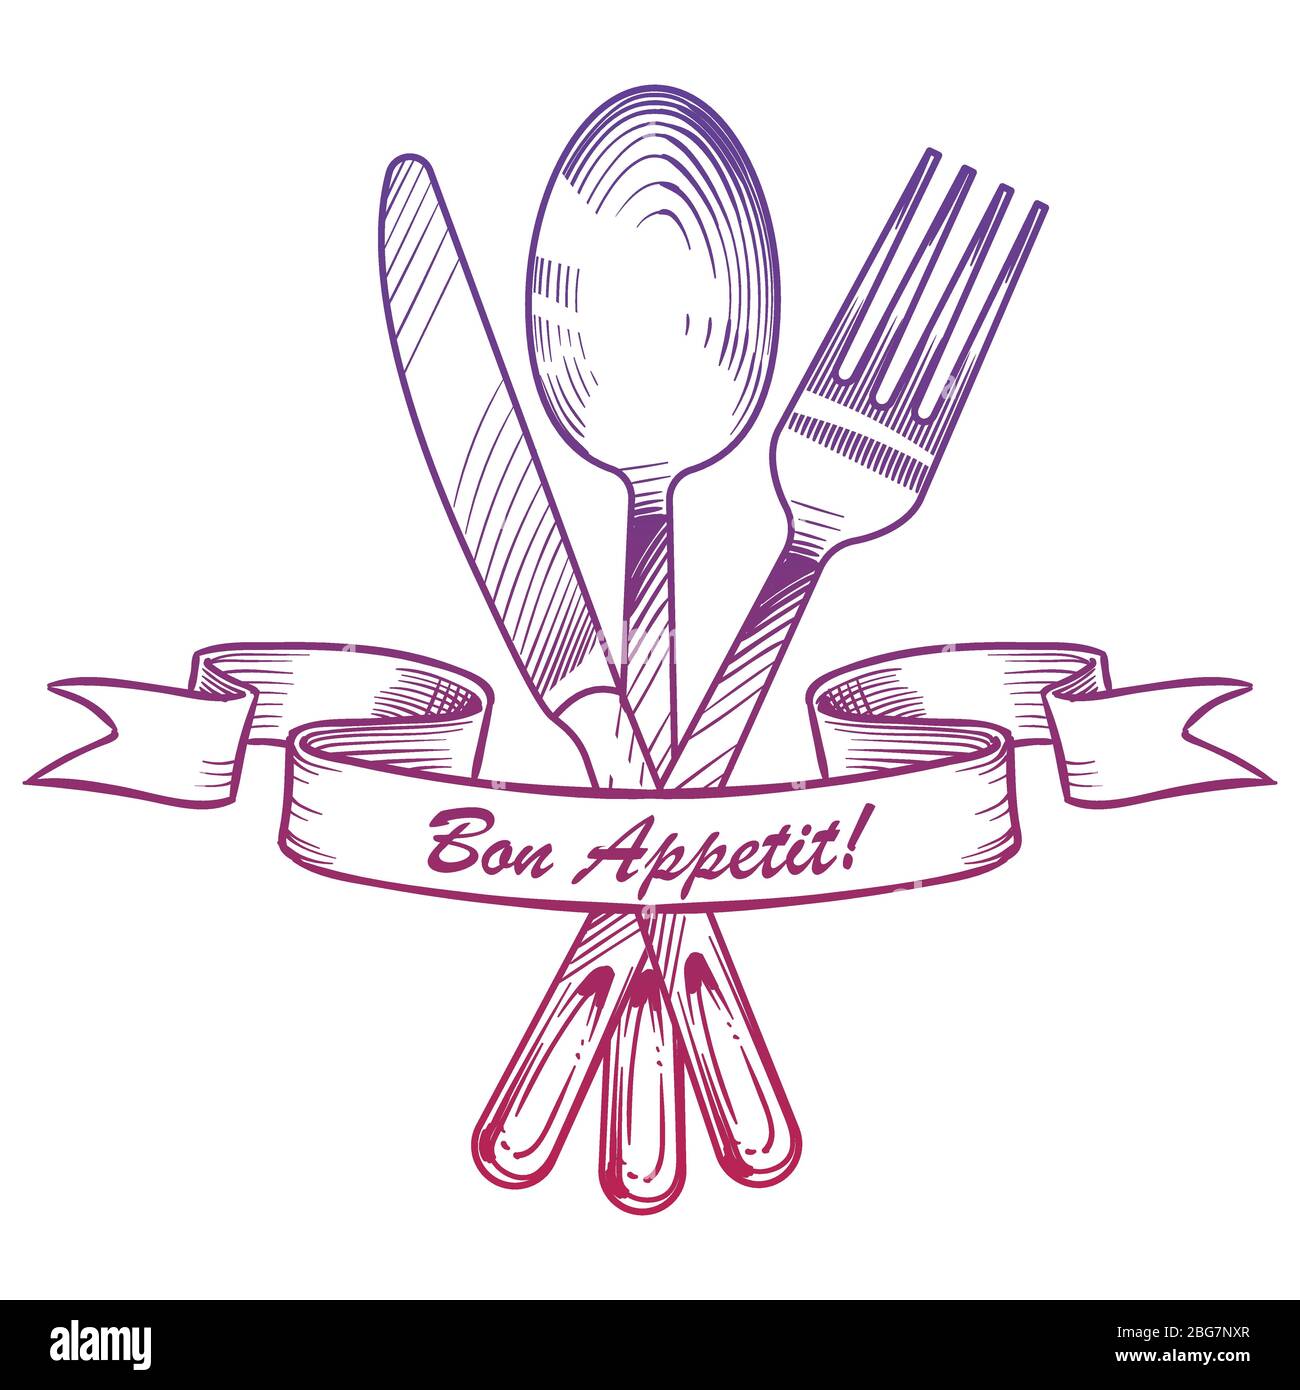 https://c8.alamy.com/comp/2BG7NXR/hand-drawn-knife-fork-spoon-and-vintage-ribbon-elegant-cutlery-serving-vector-illustration-2BG7NXR.jpg